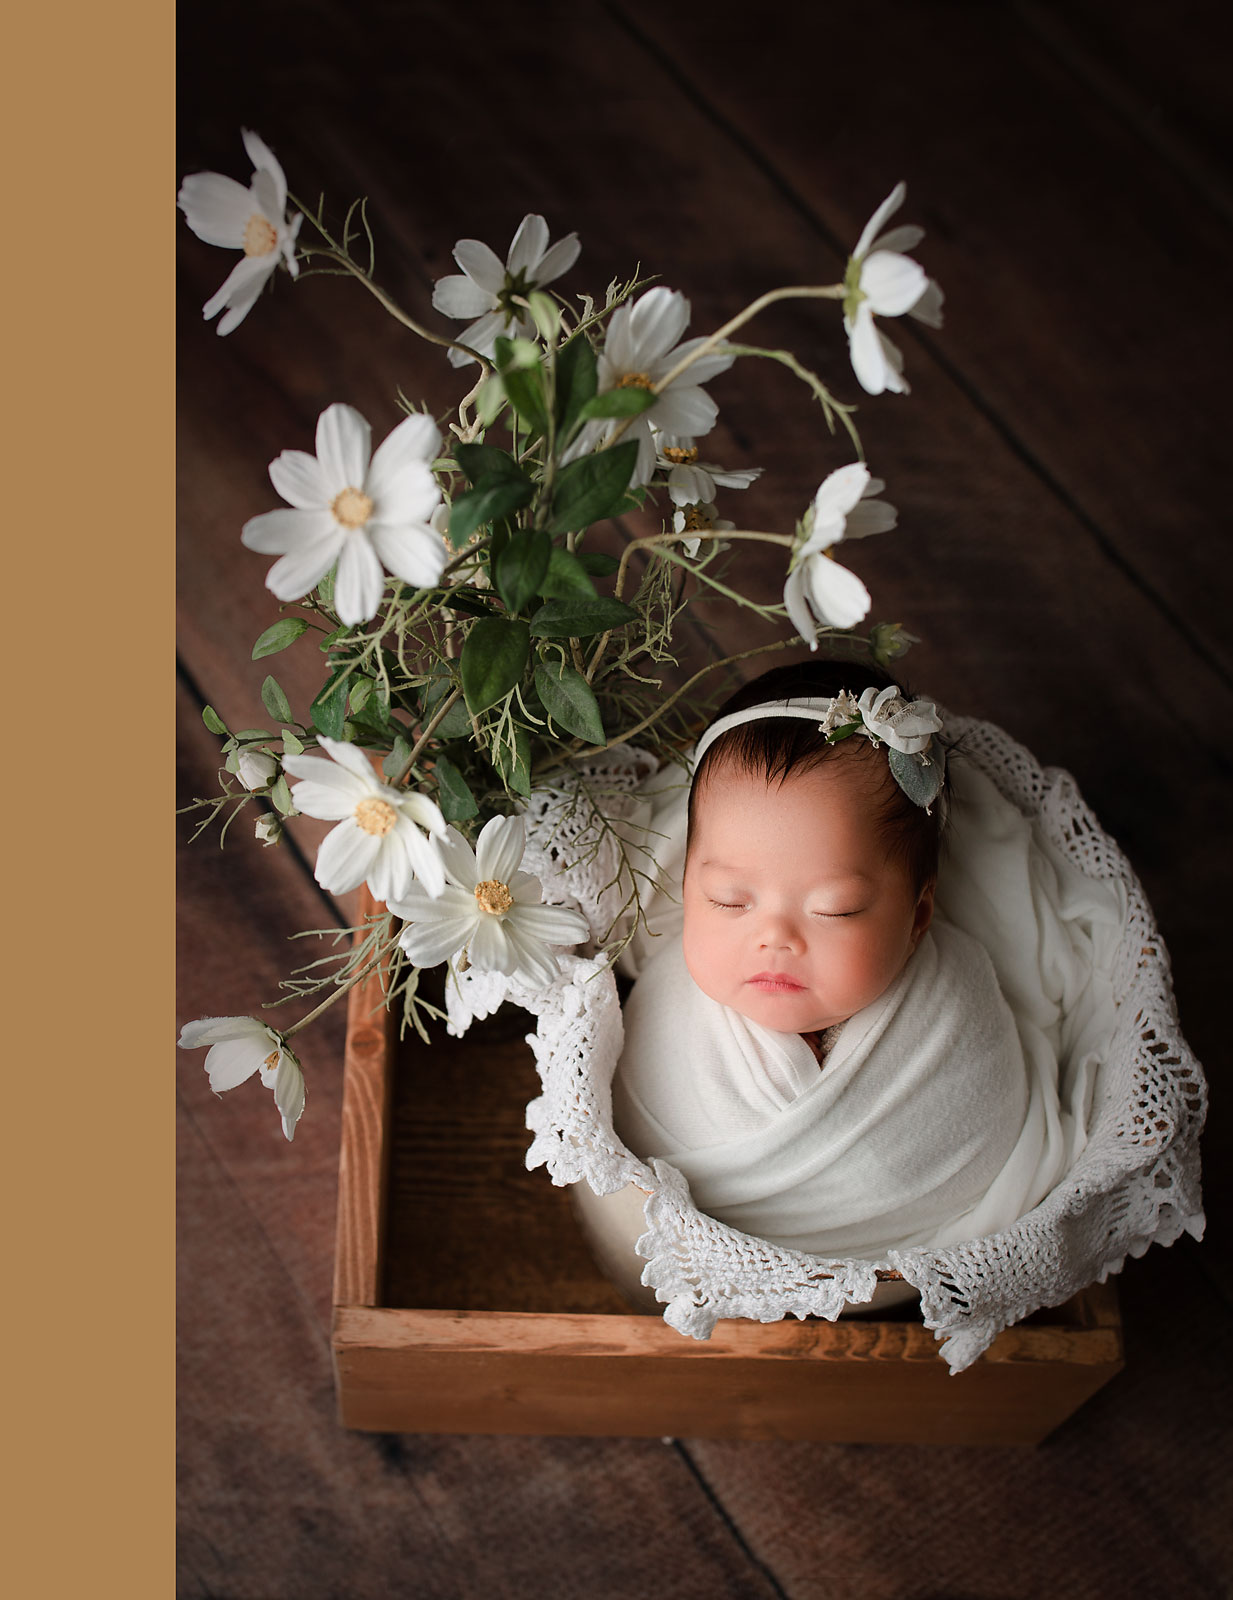 newborn girl sleeping in a bucket with flowers Bergen County NJ Newborn Photography 